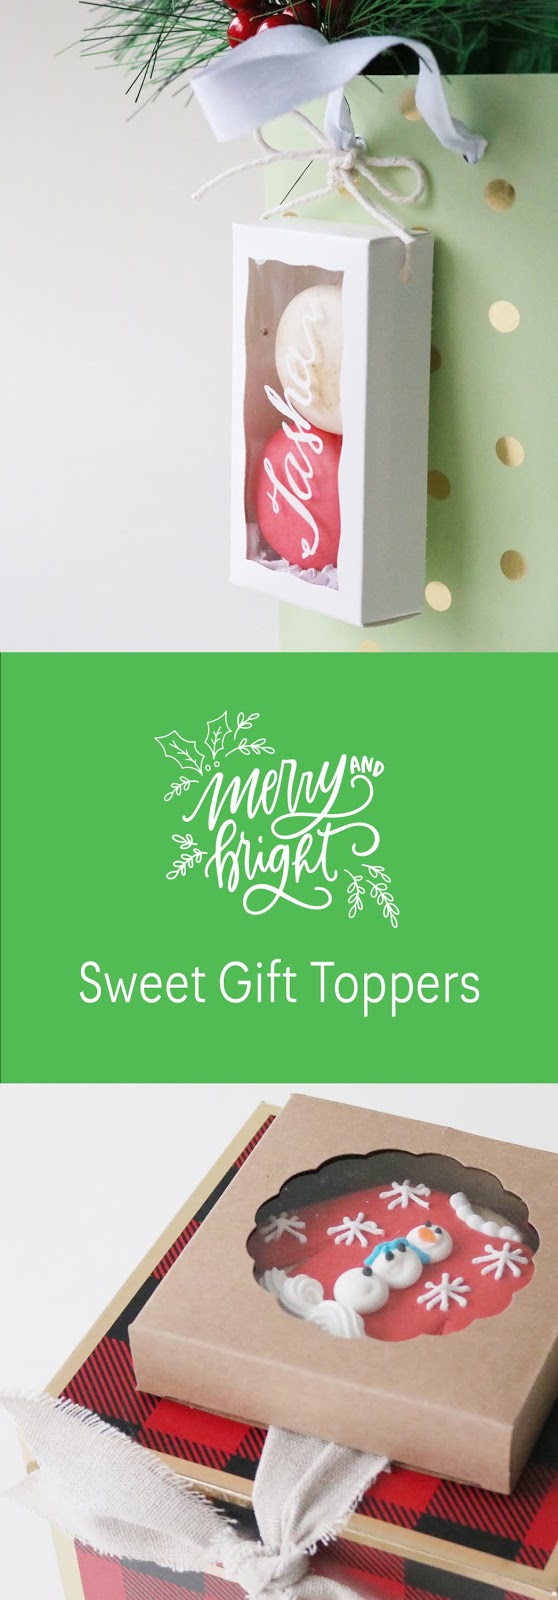 edible gift topper inspiration for holiday gift wrapping | Creative Bag and Bake Sale Toronto